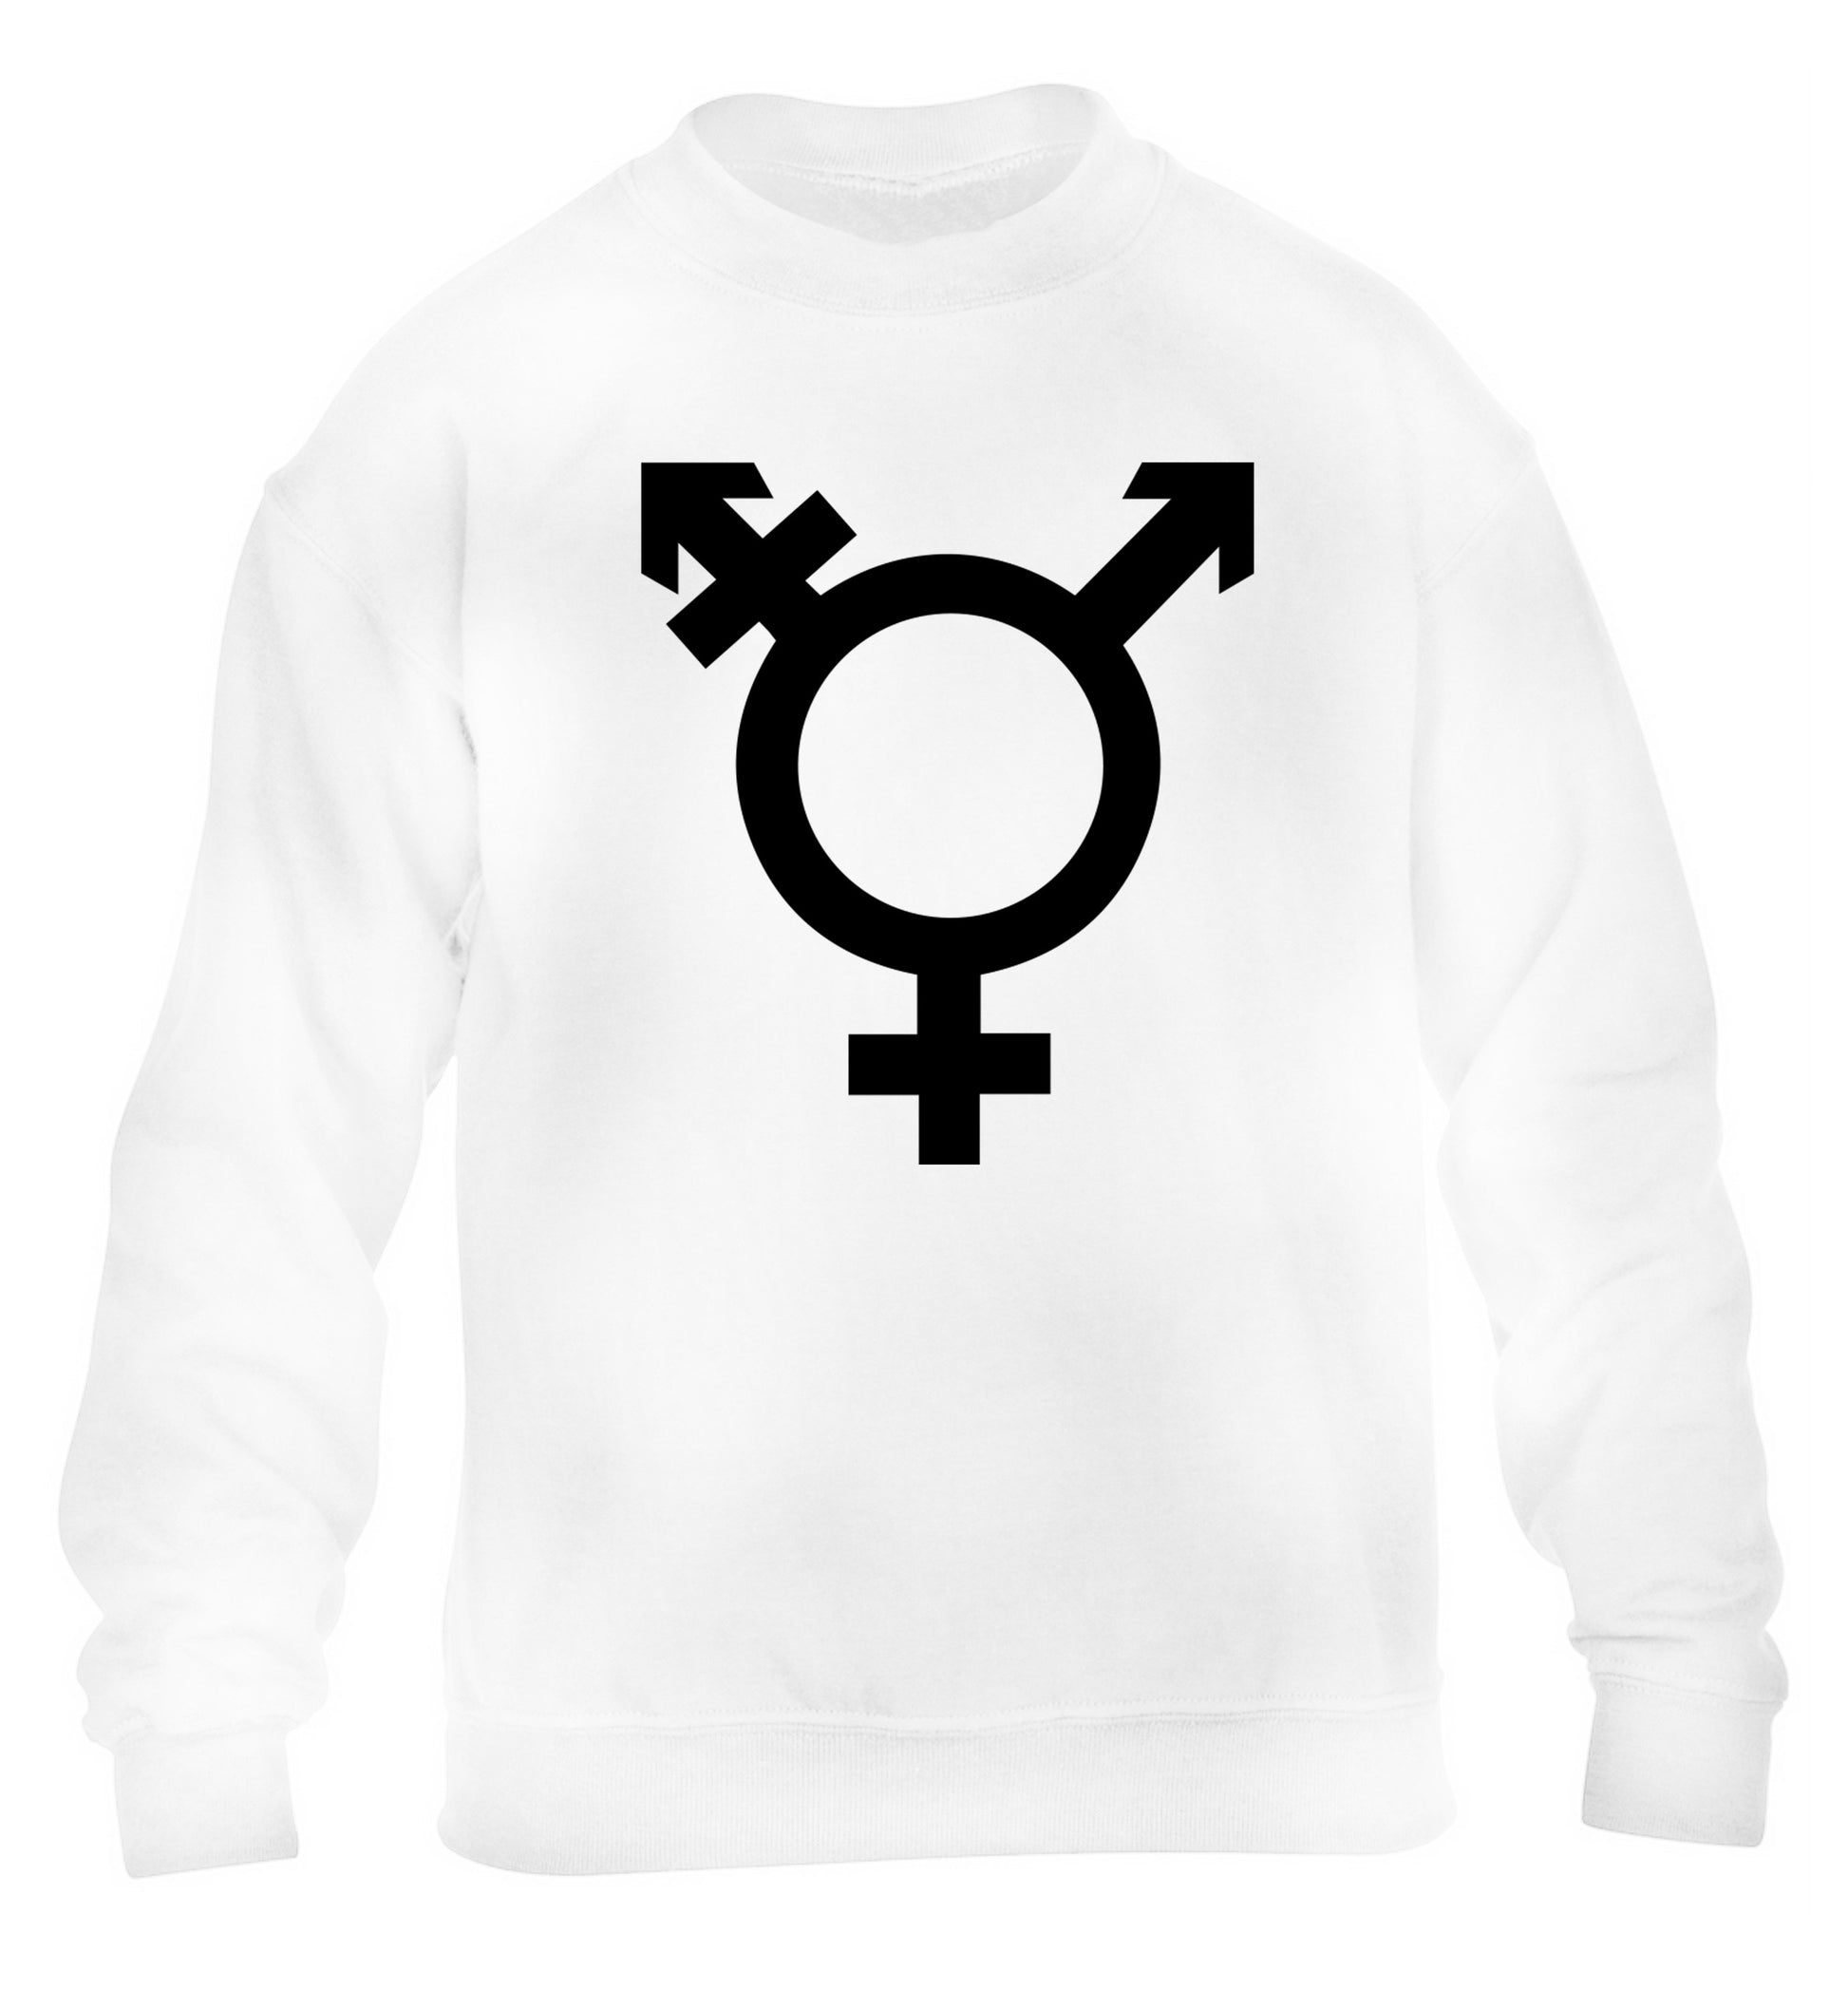 Gender neutral symbol large children's white sweater 12-14 Years